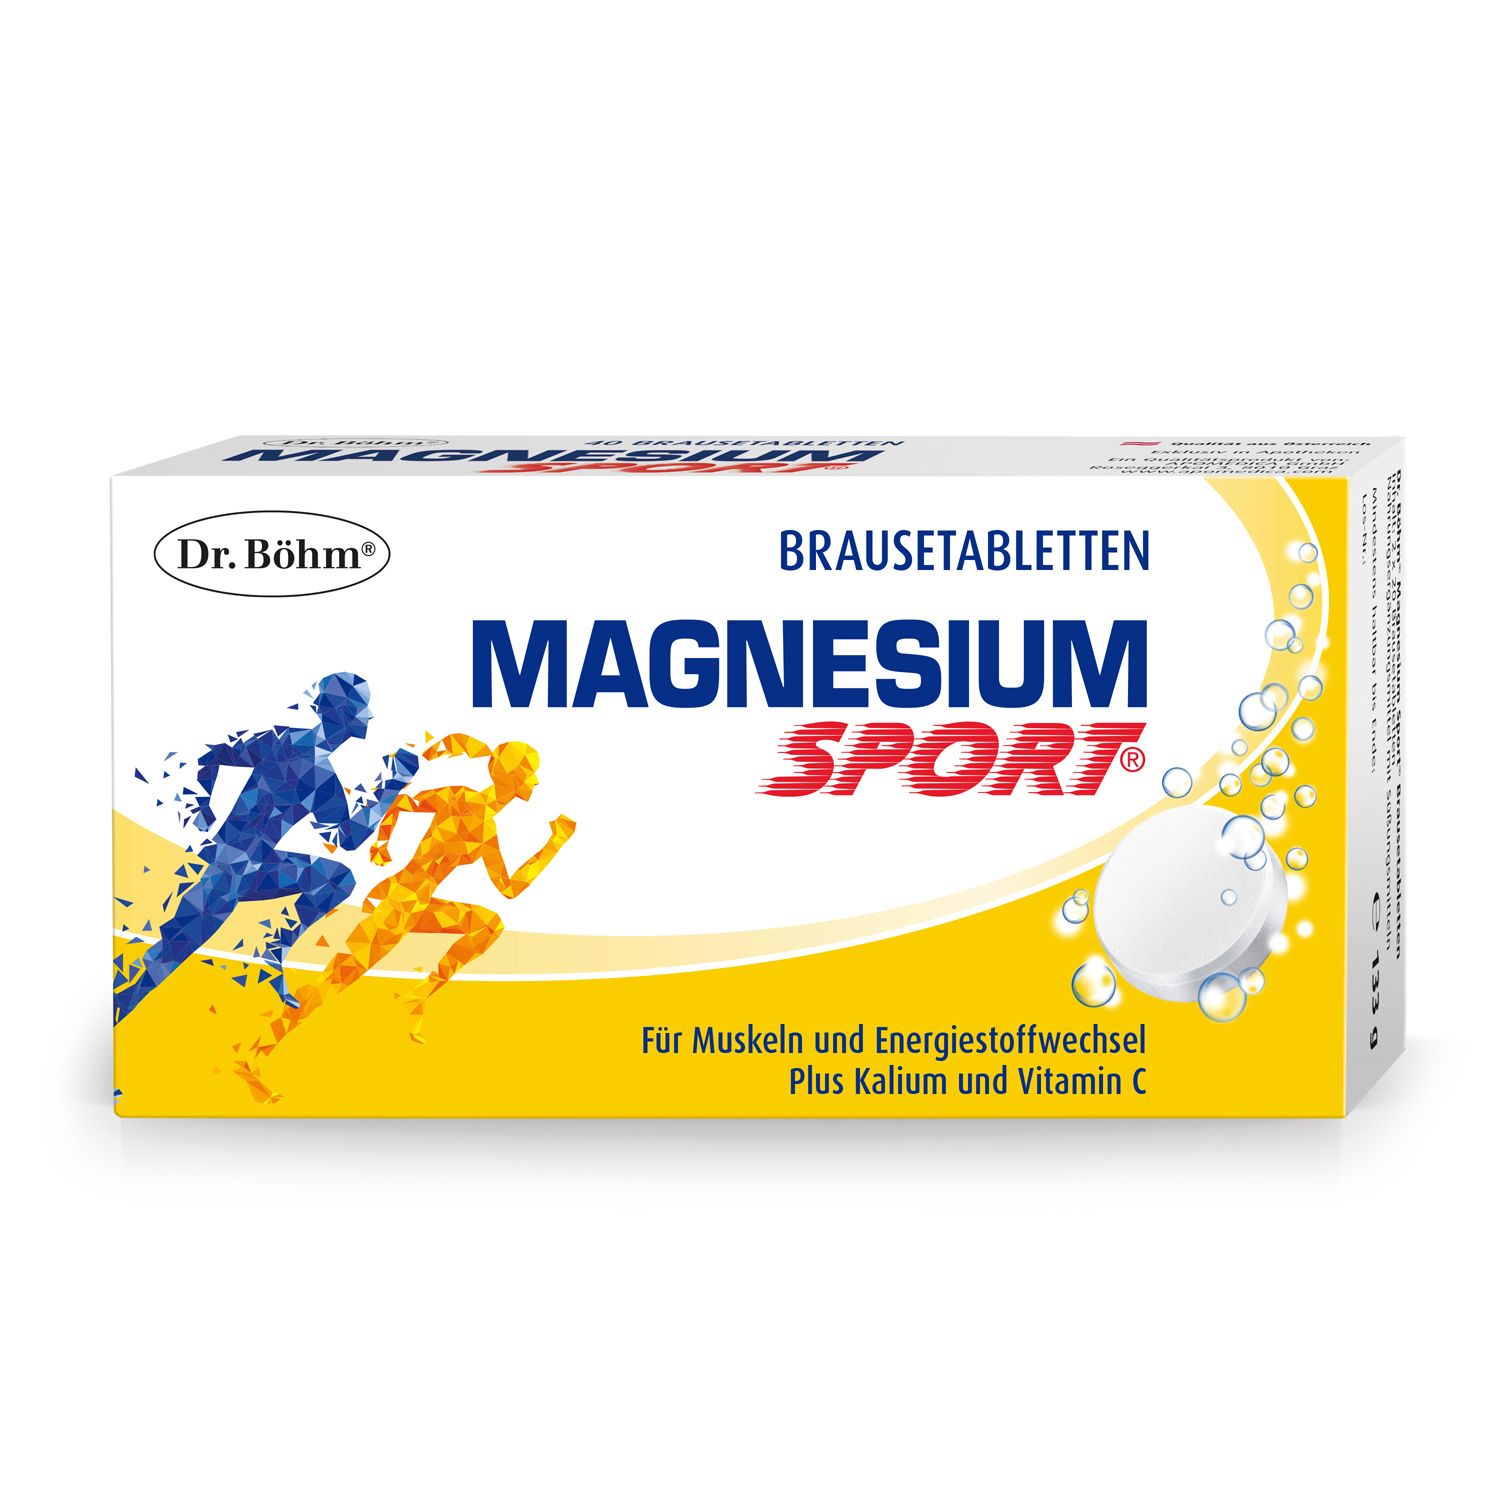 Image of Dr. Böhm® Magnesium Sport Brausetabletten